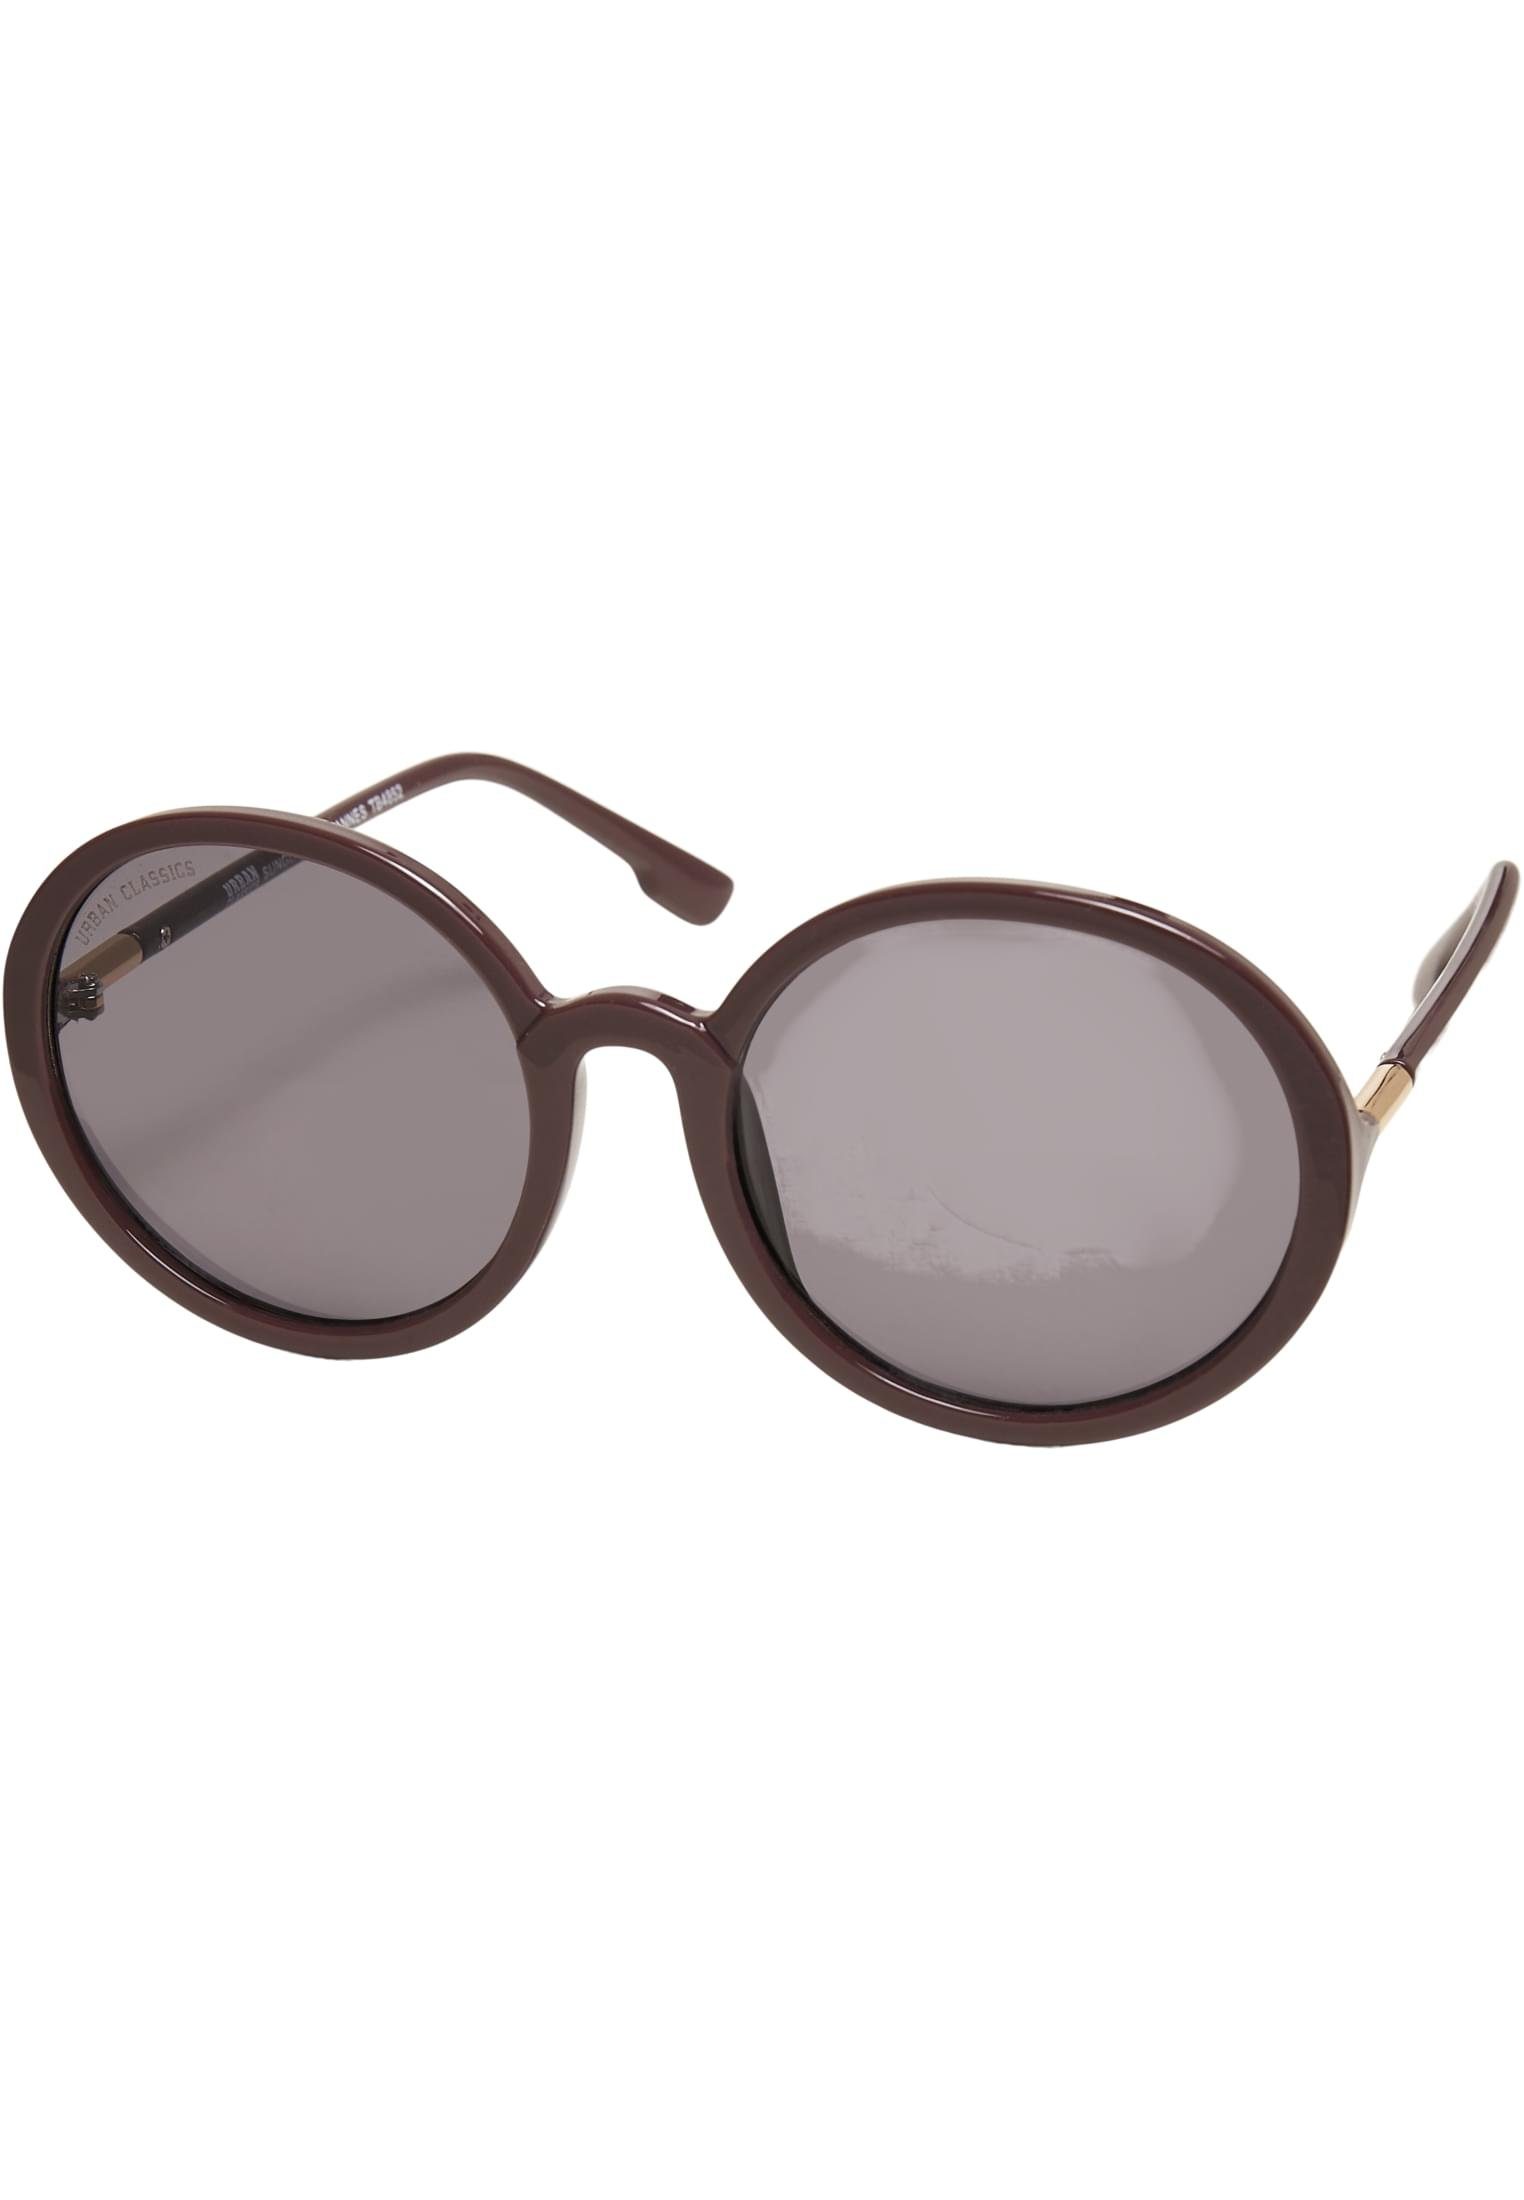 Sunglasses Accessoires im Cannes geeignet with Sonnenbrille auch Sport Freien URBAN Ideal für CLASSICS Chain,